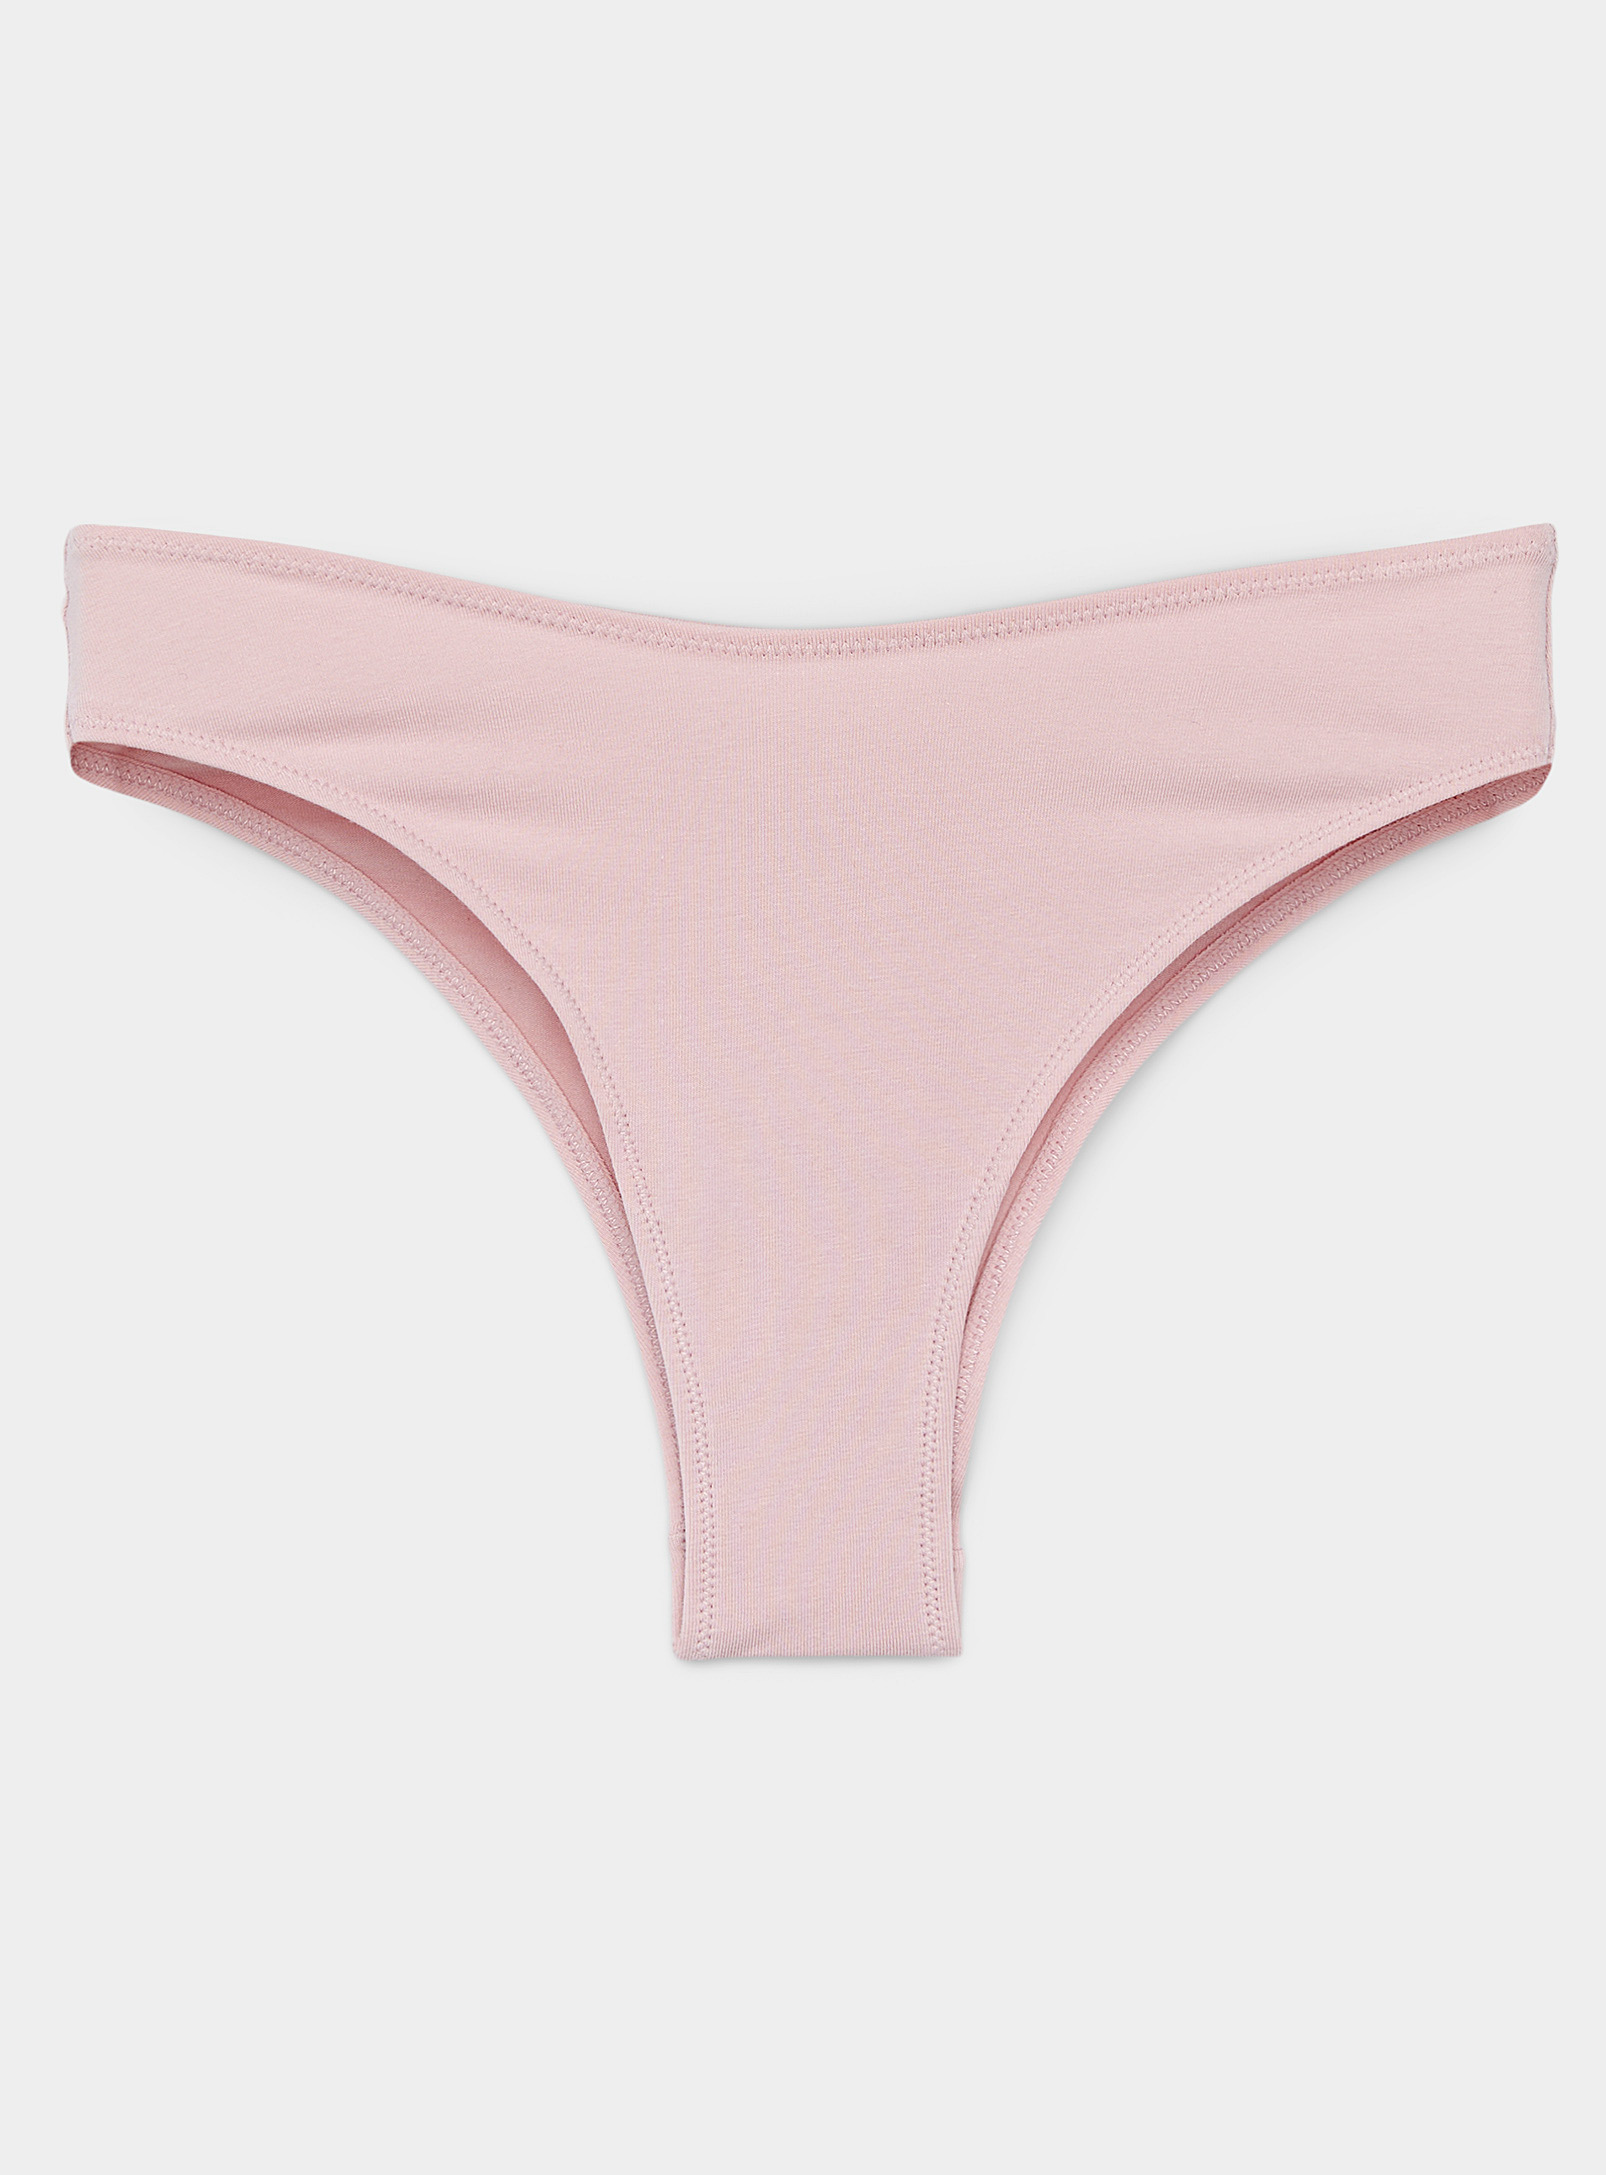 Miiyu High-cut Organic Cotton Brazilian Panty In Dusky Pink